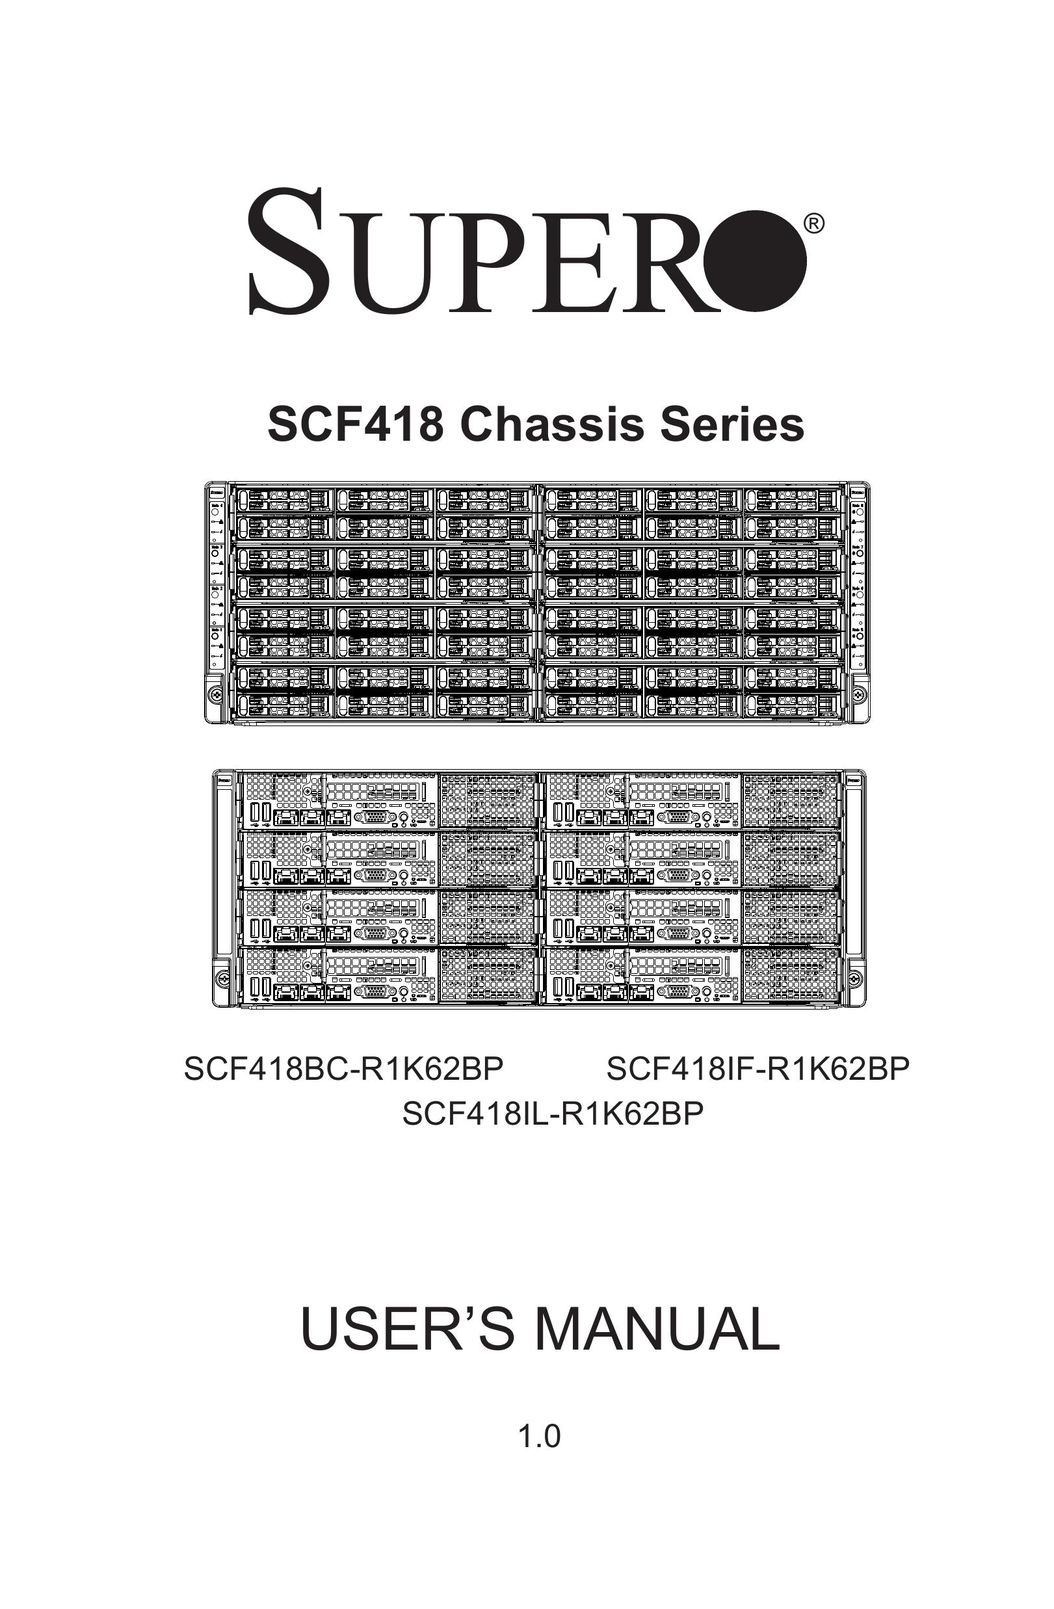 SUPER MICRO Computer SCF418 Computer Hardware User Manual